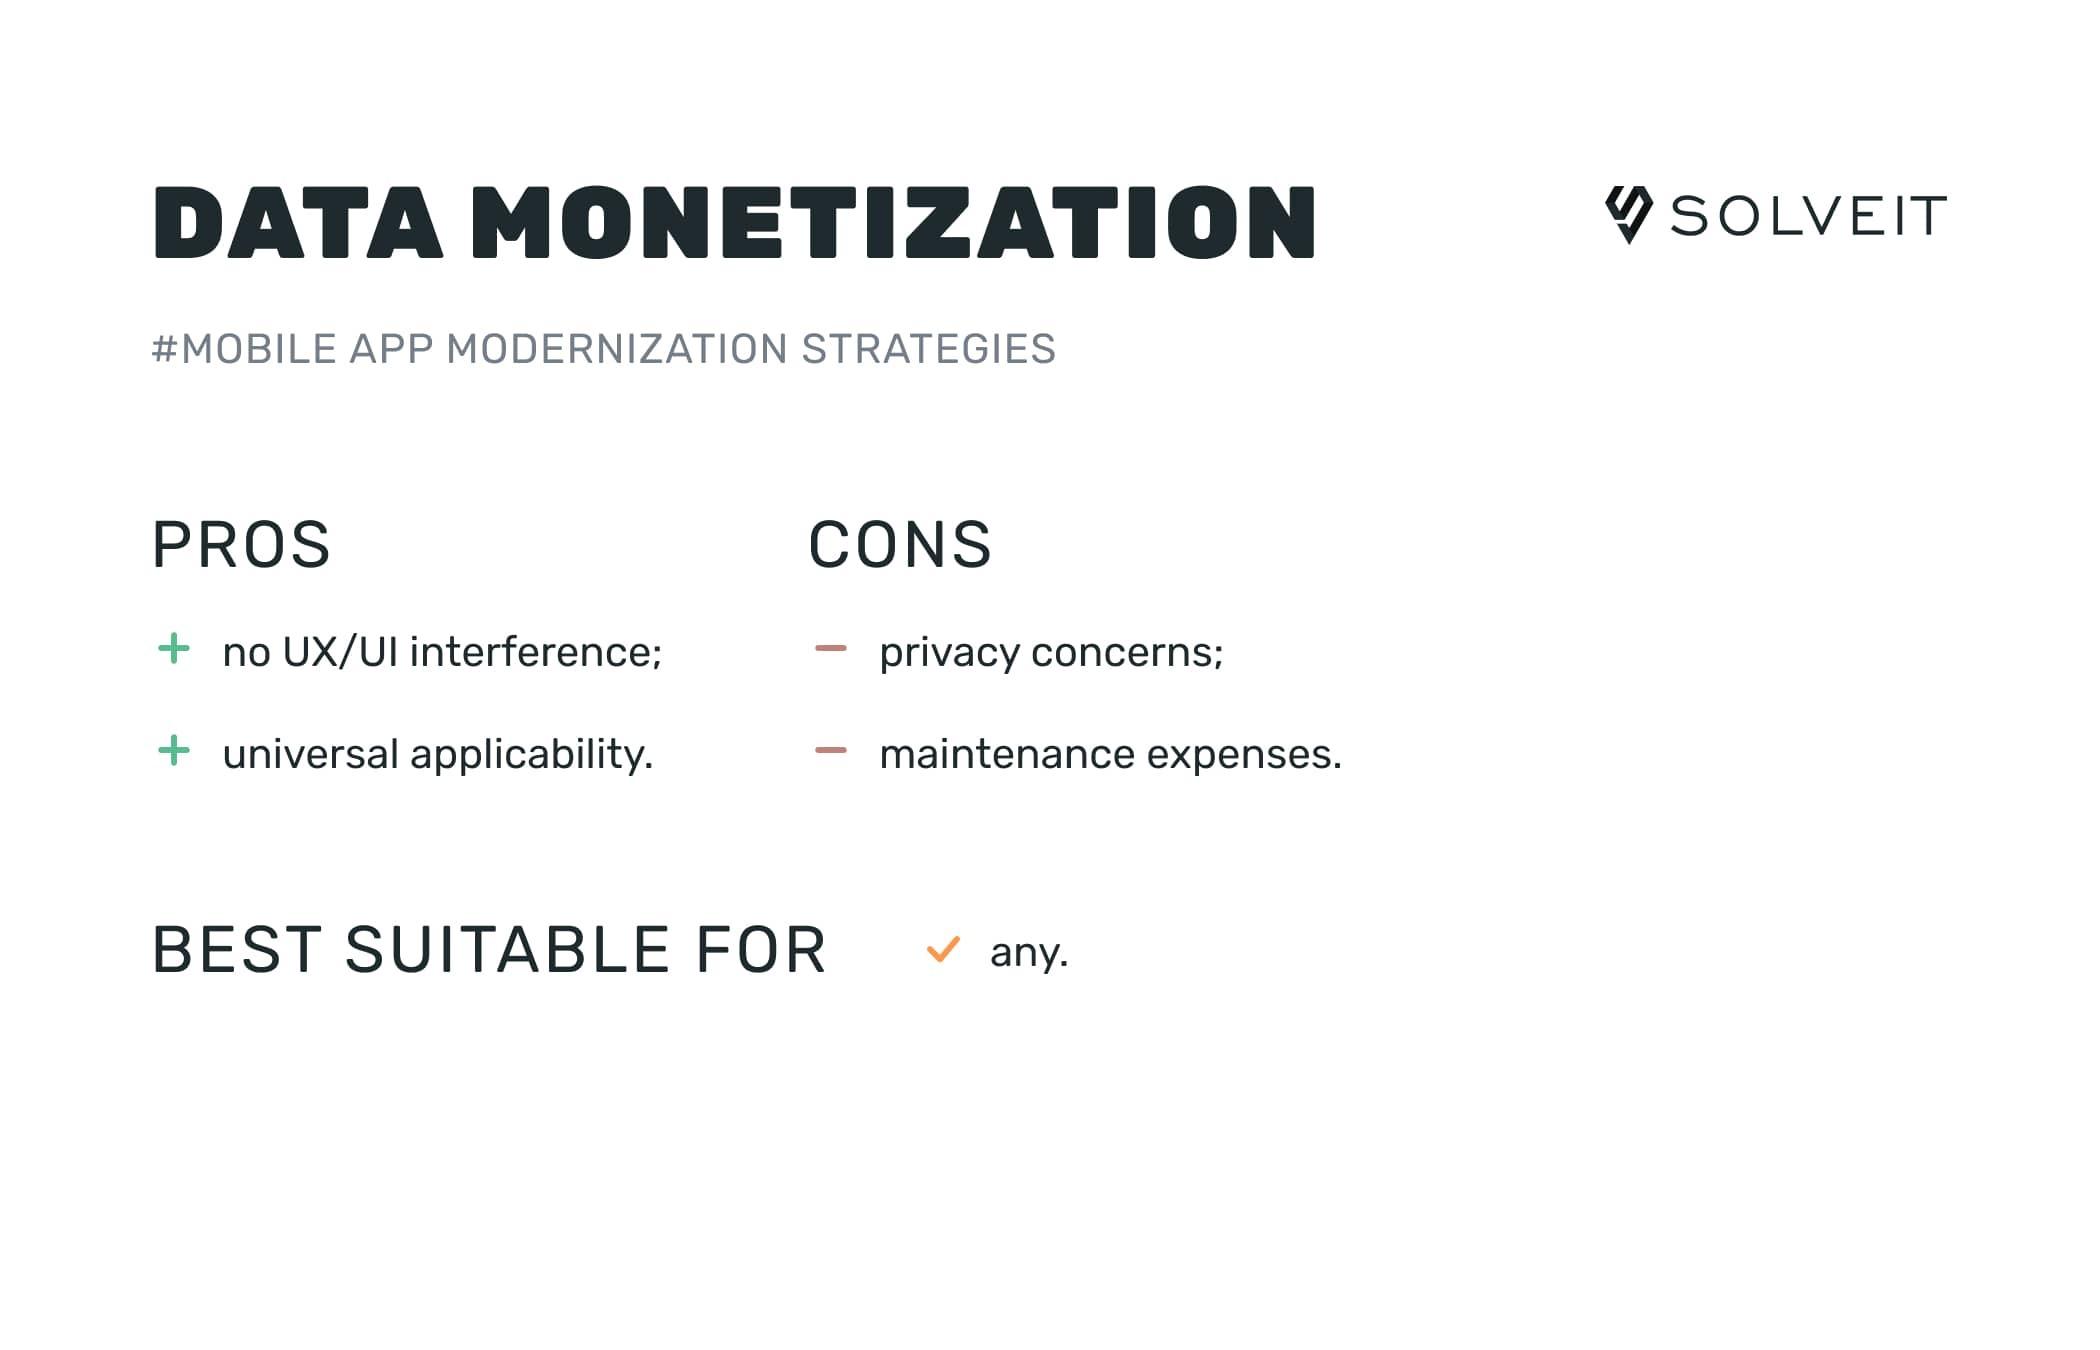 Mobile app monetization strategy: data monetization